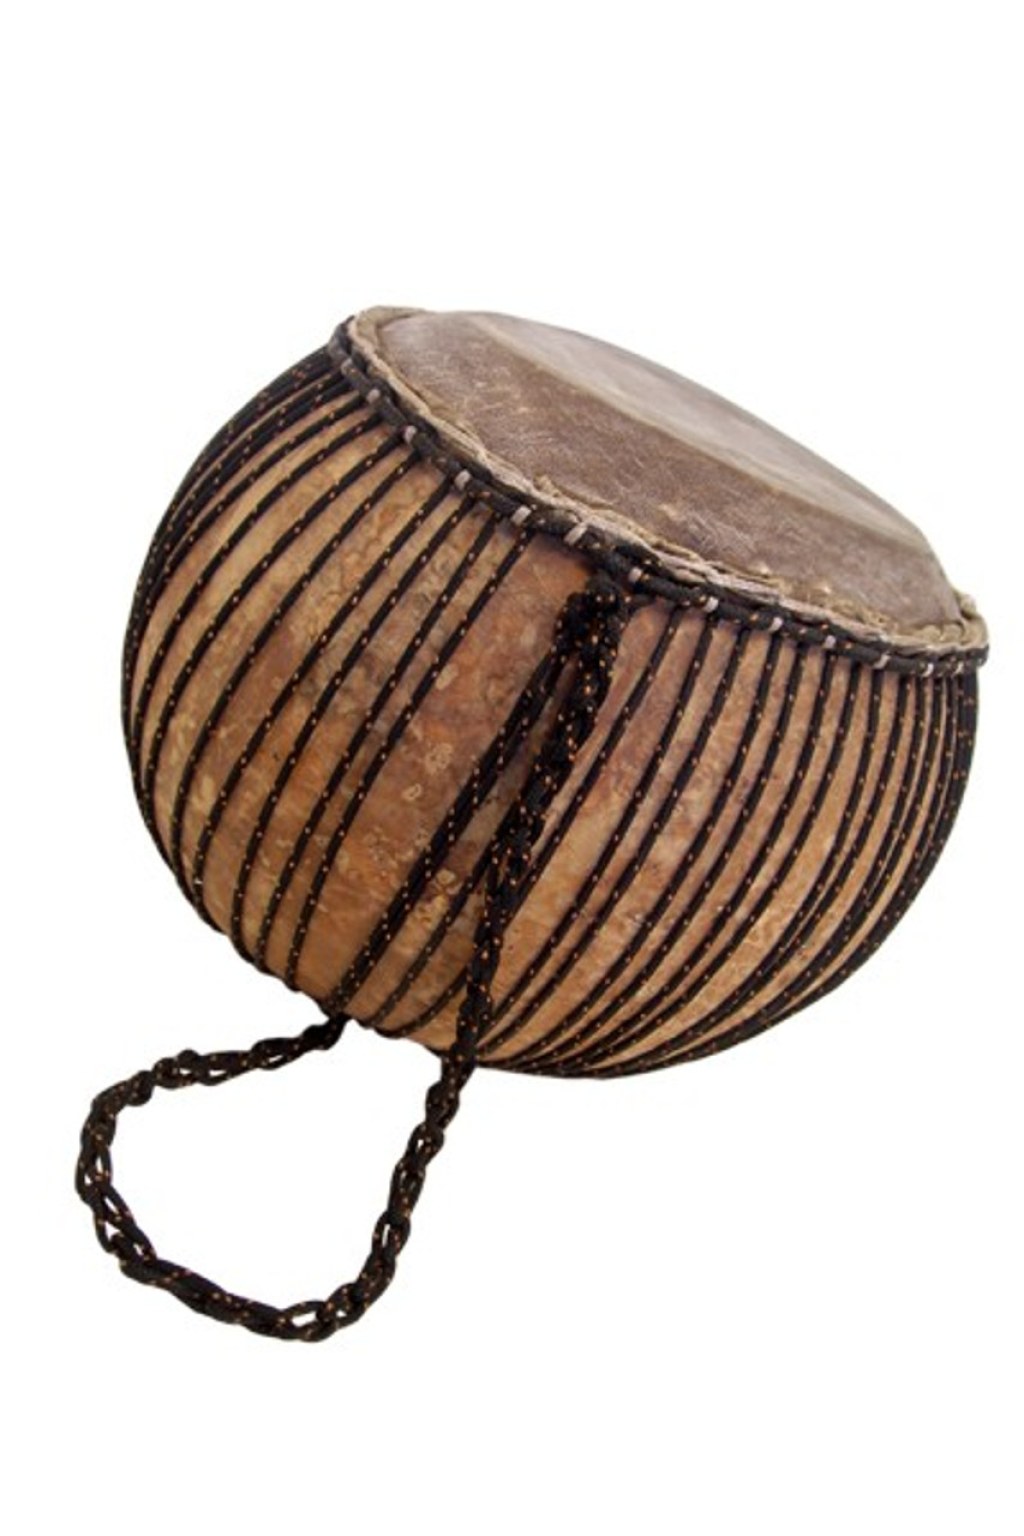 calabash drum - Paragon Heartwood Mali Pro Bara Gourd Drum